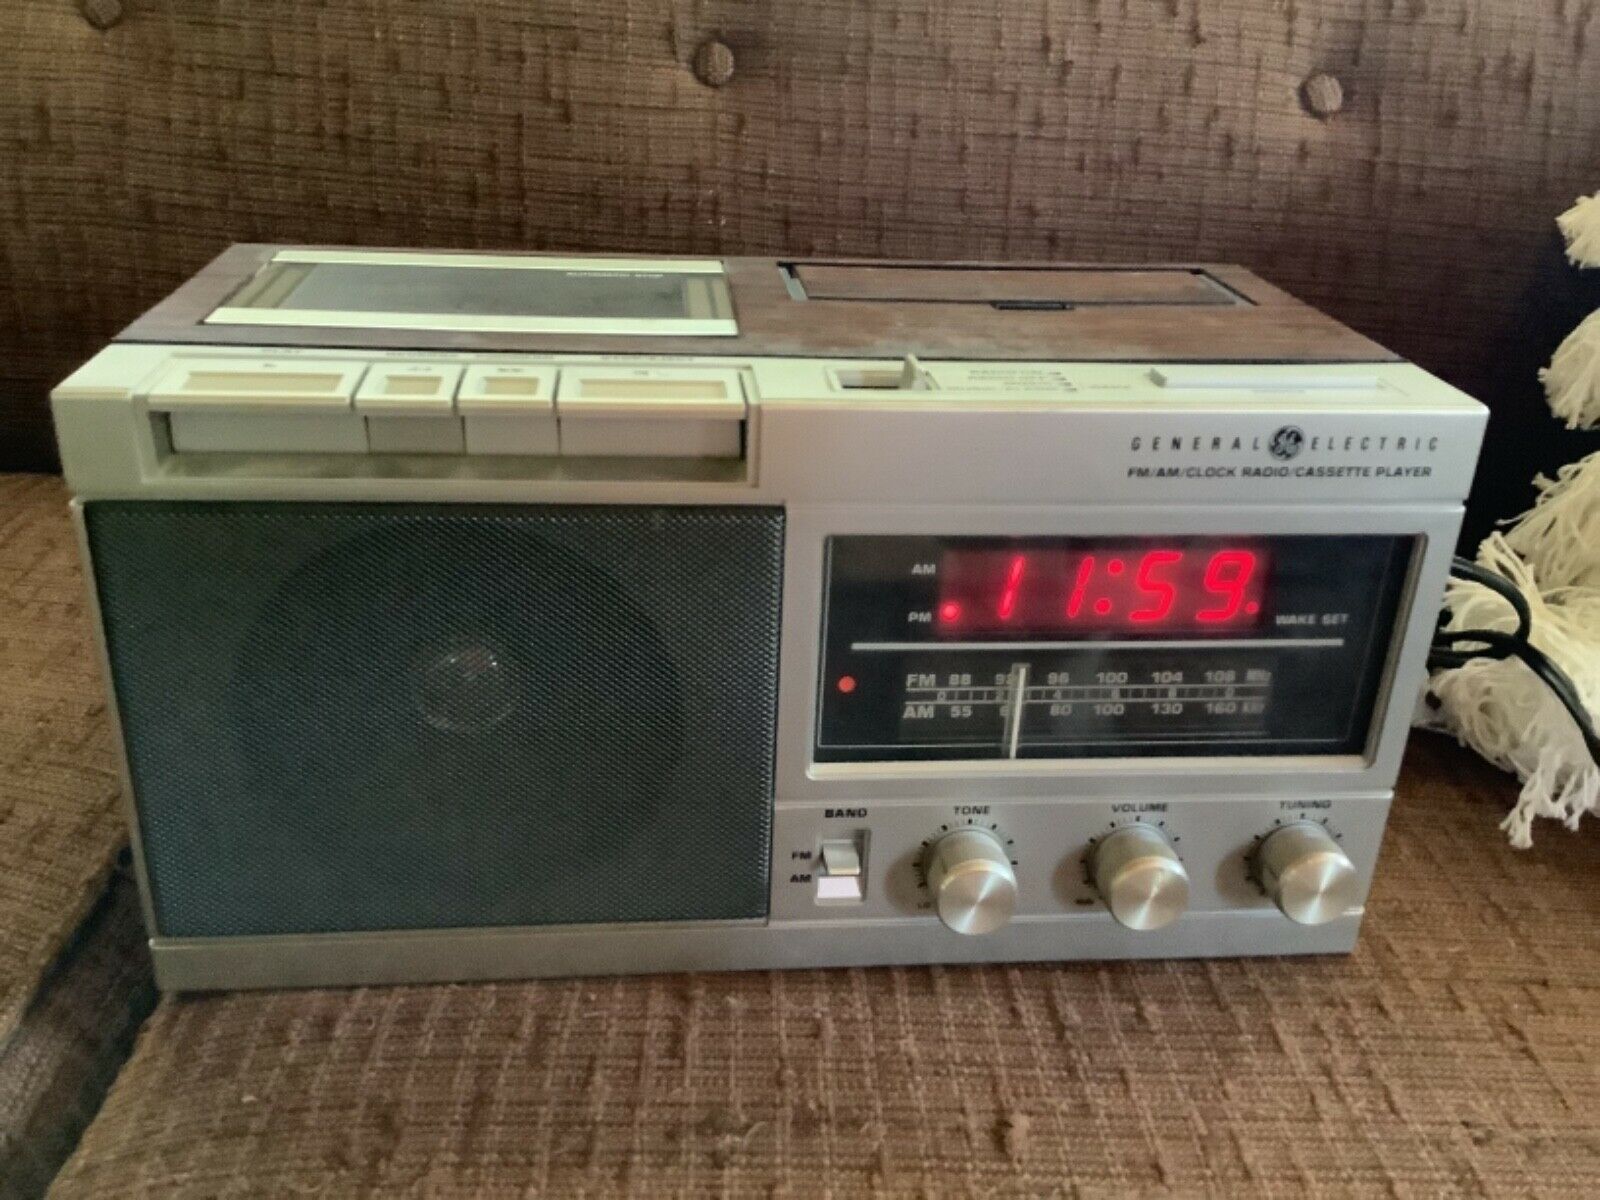 VINTAGE General Electric GE 7-4950A AM/FM Alarm Clock Radio Tape Cassette Player